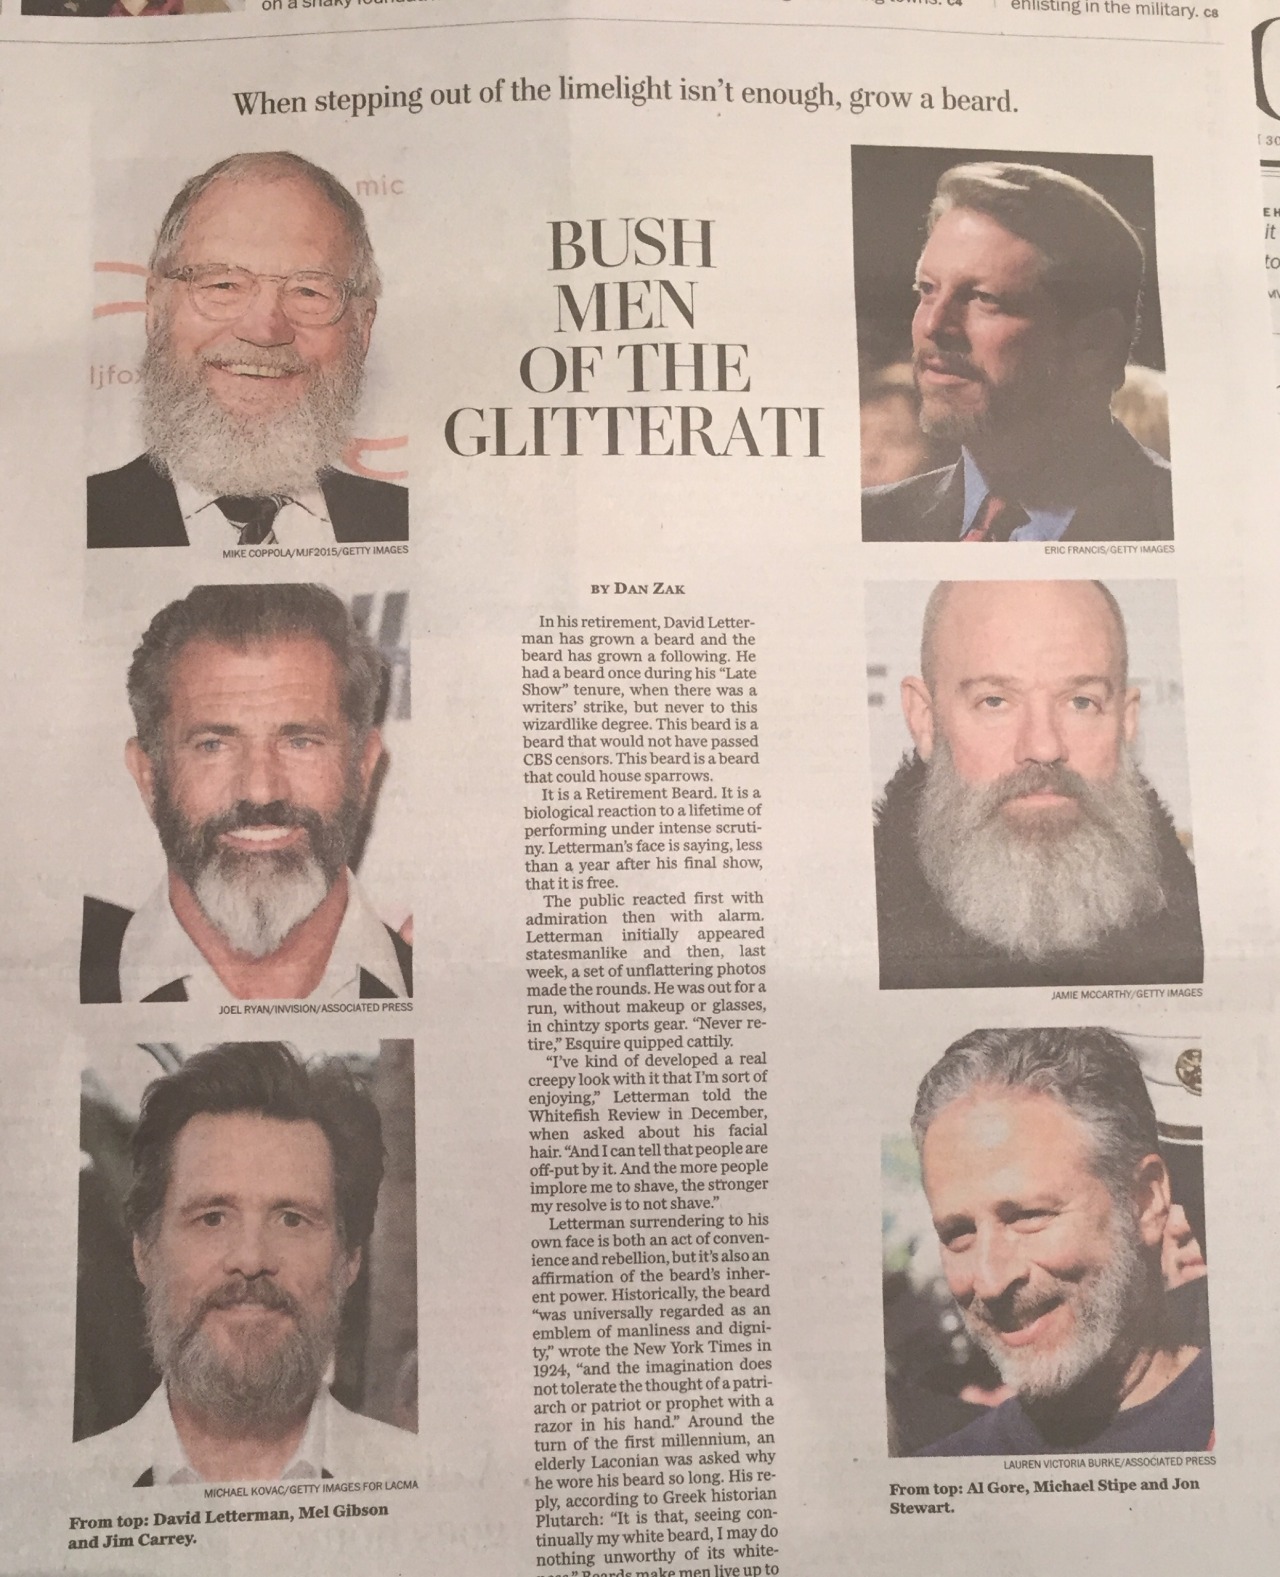 Six white men – David Letterman, Mel Gibson, Jim Carrey, Al Gore, Michael Stipe, and Jon Stewart – are designated “bush men of the glitterati” by The Washington Post.